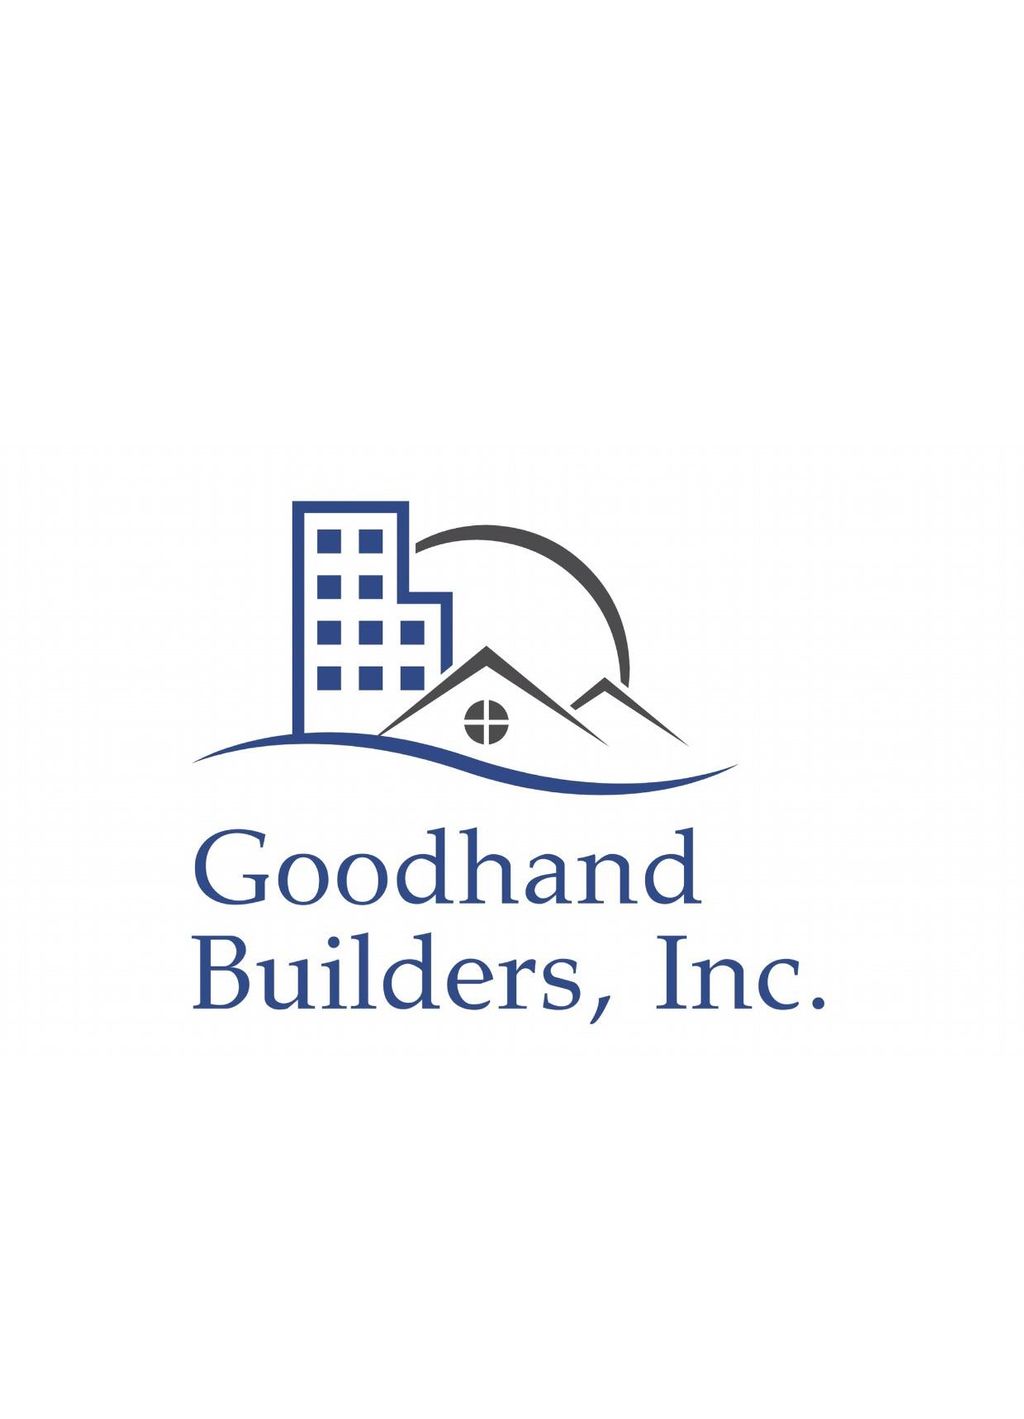 Goodhand Builders, Inc.